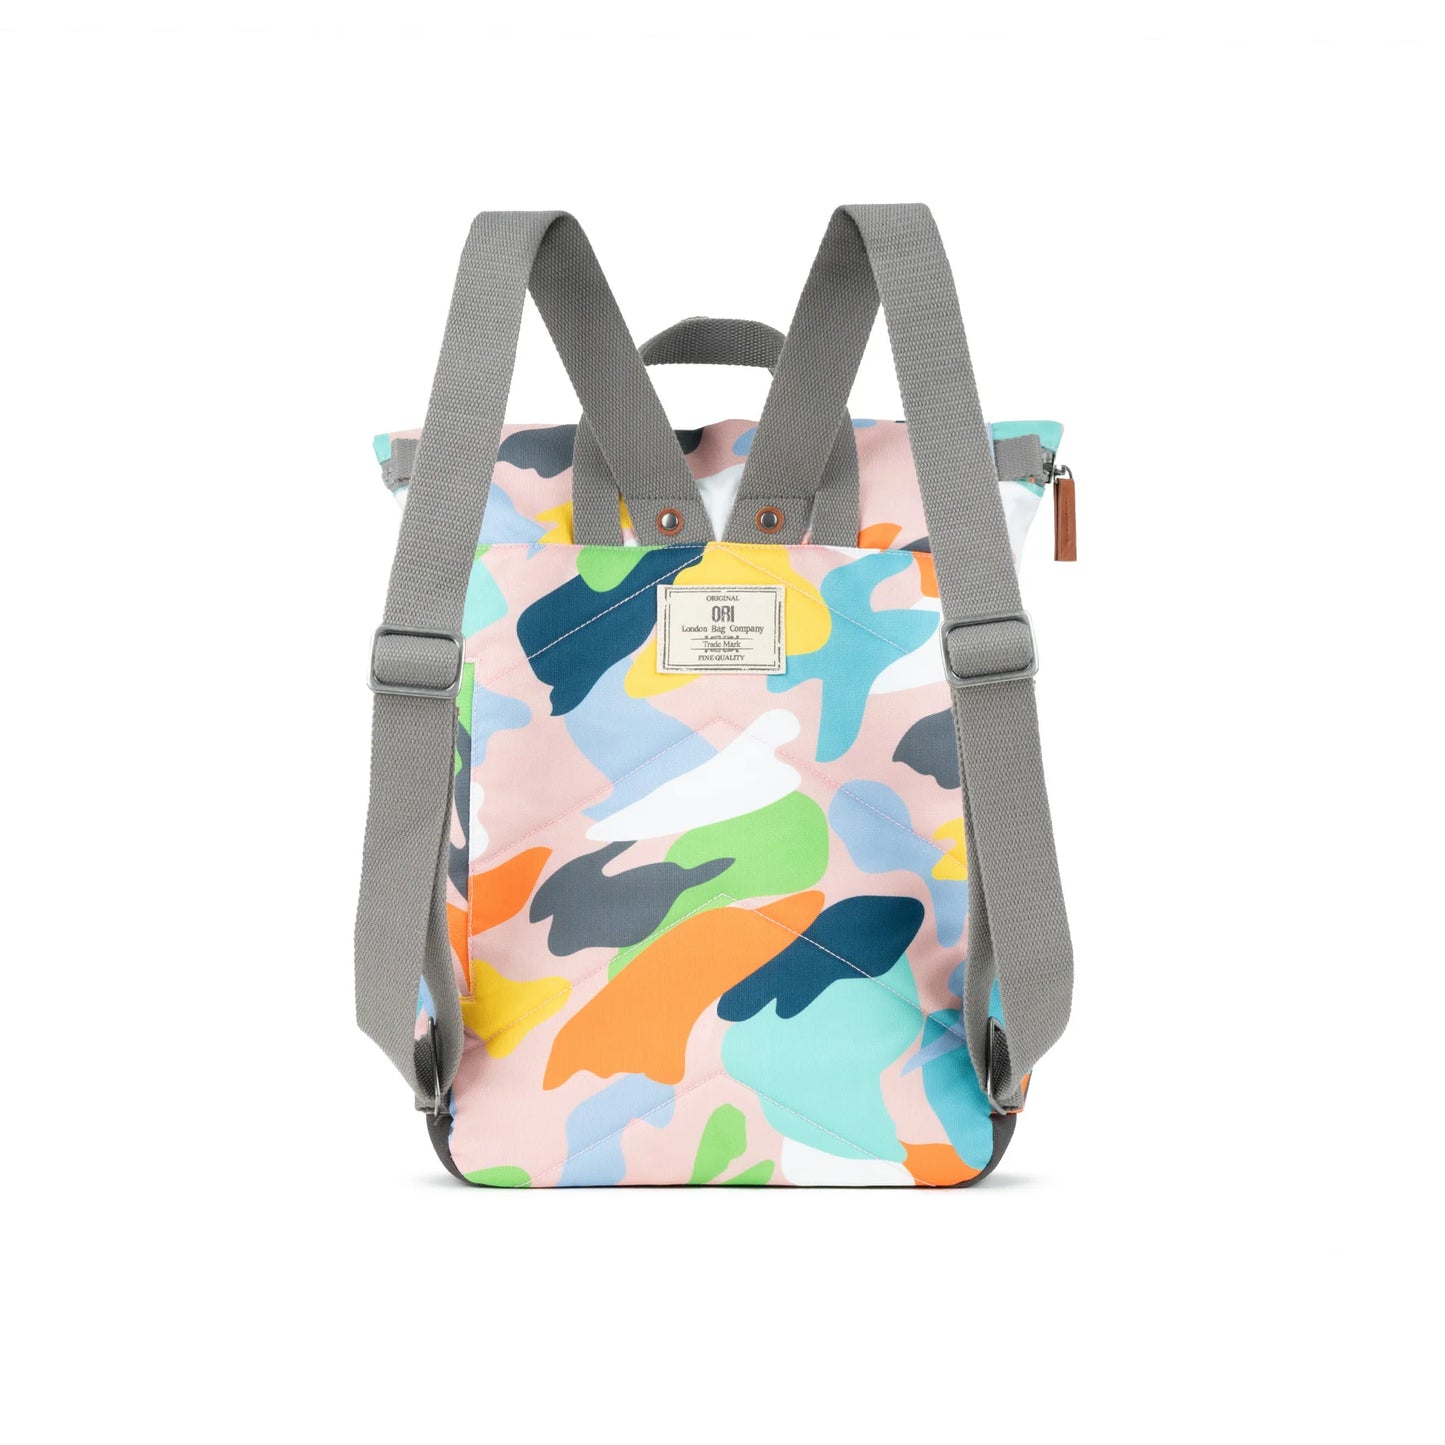 ORI Canfield B Sustainable Backpack - Mello Camo (Canvas) - Medium